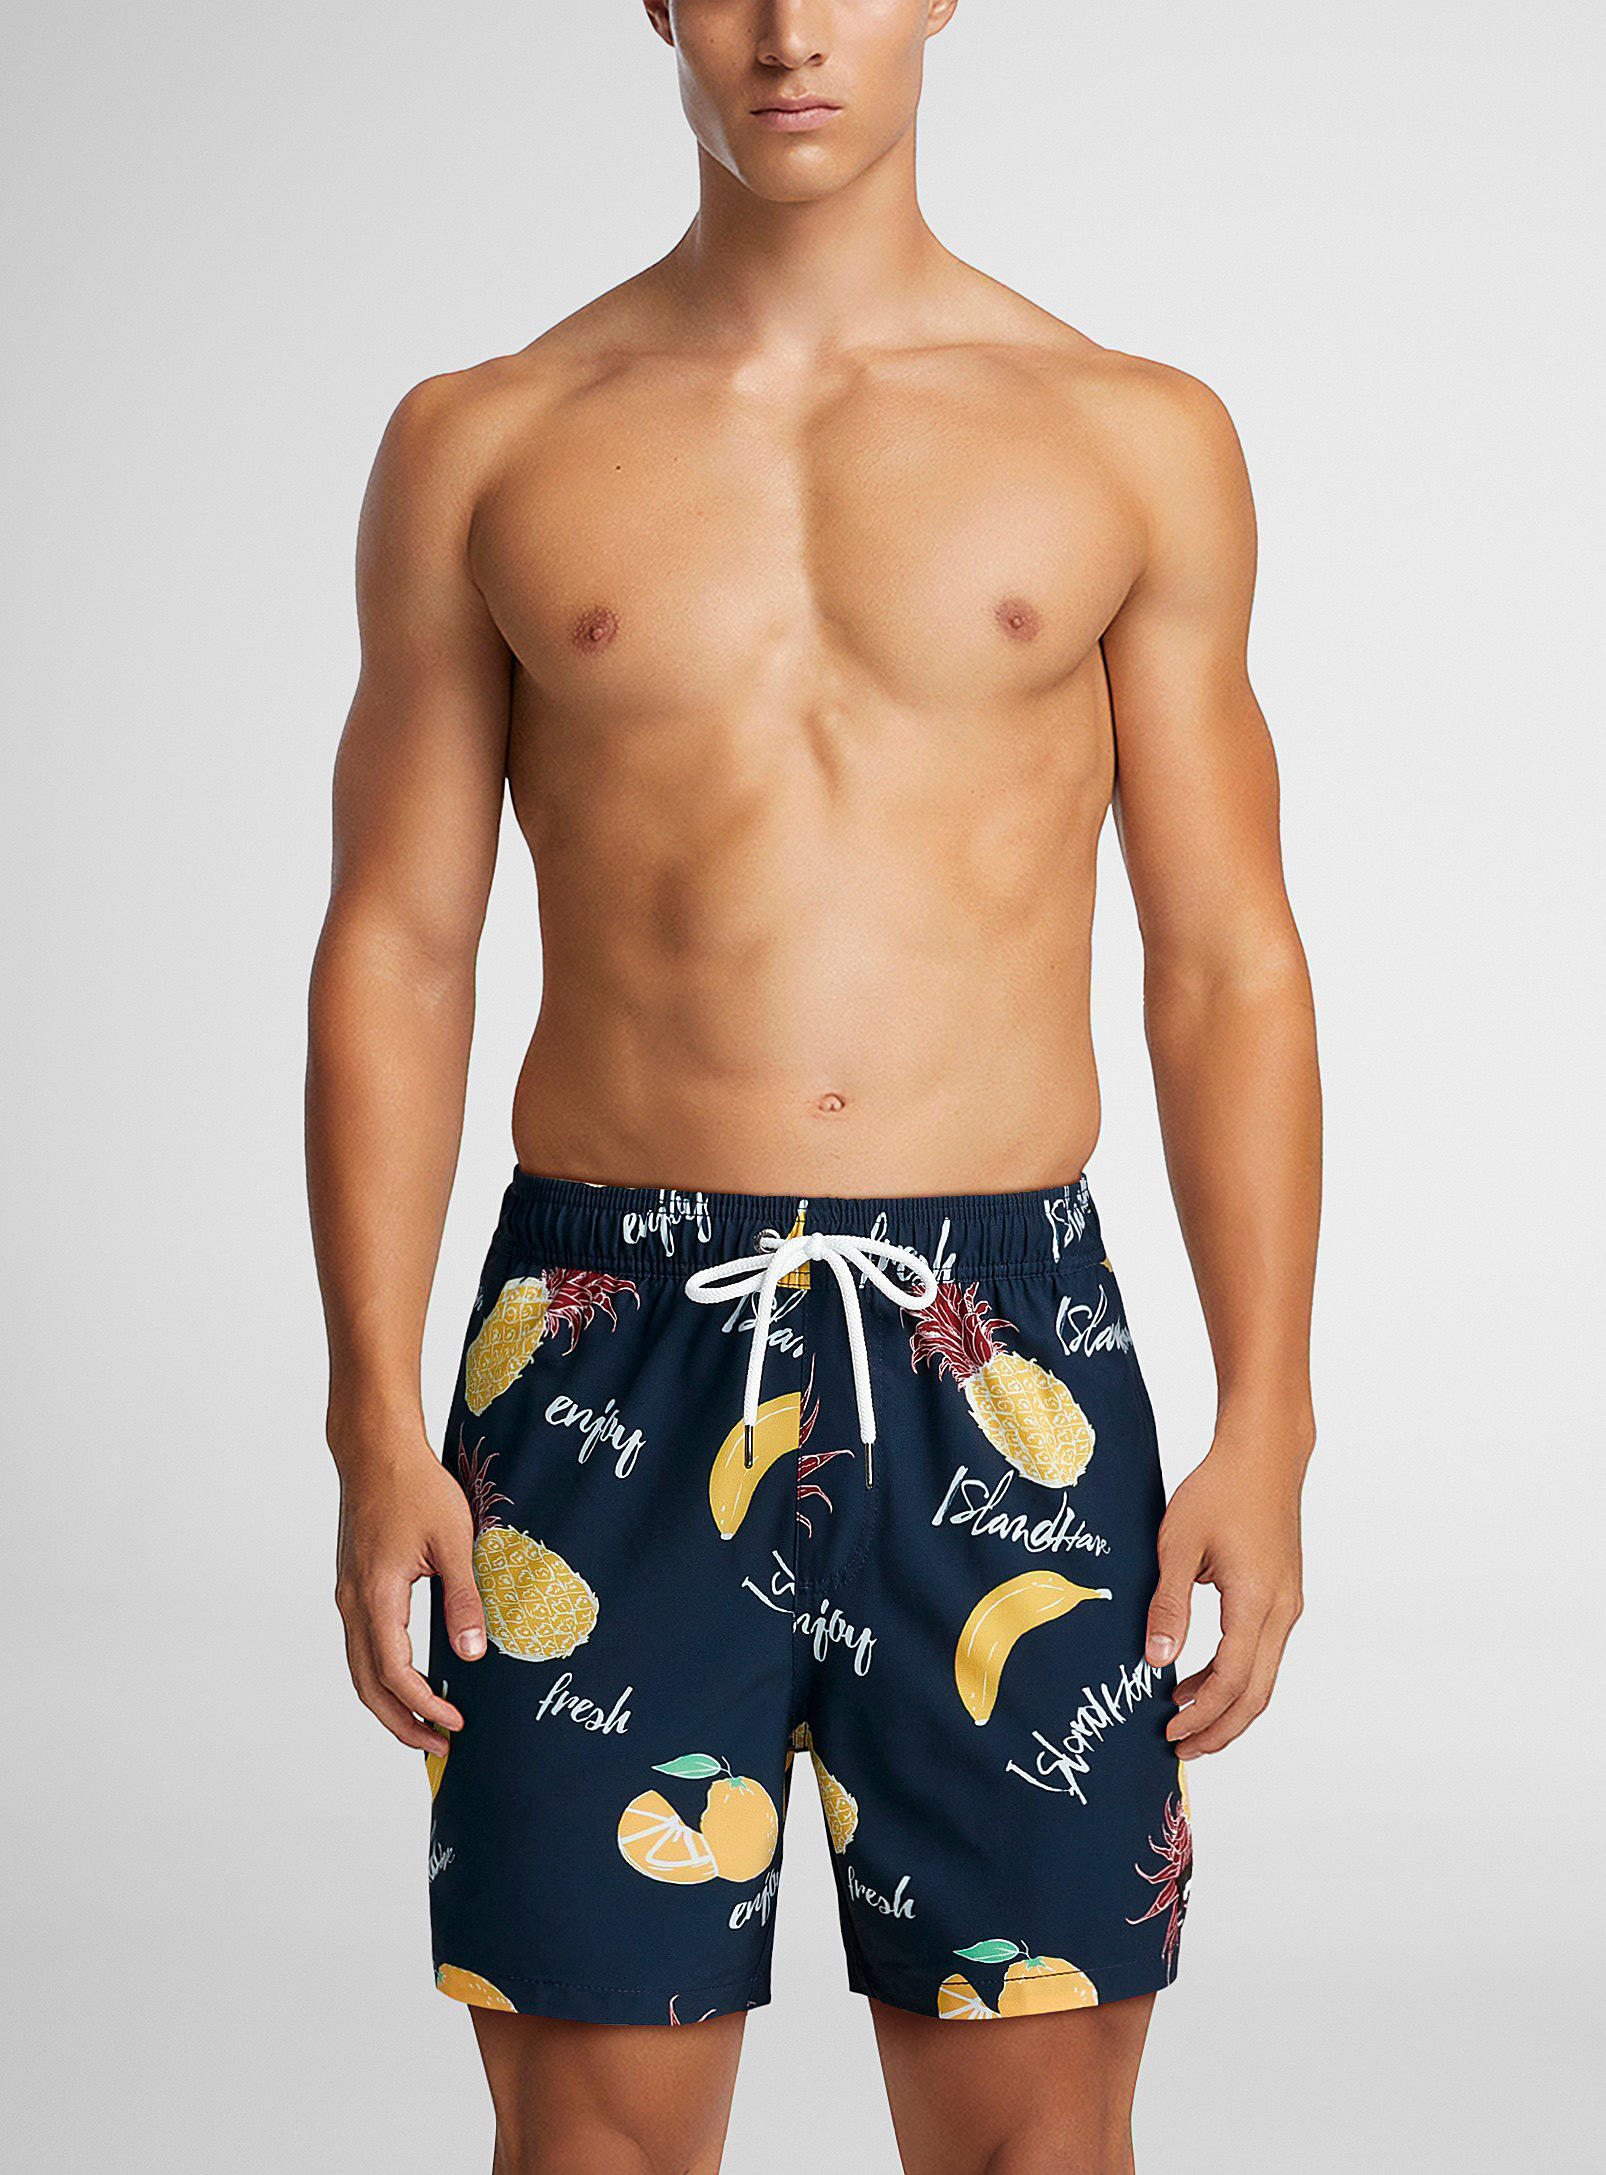 Island Haze - Men's Yellow fruit swim trunk